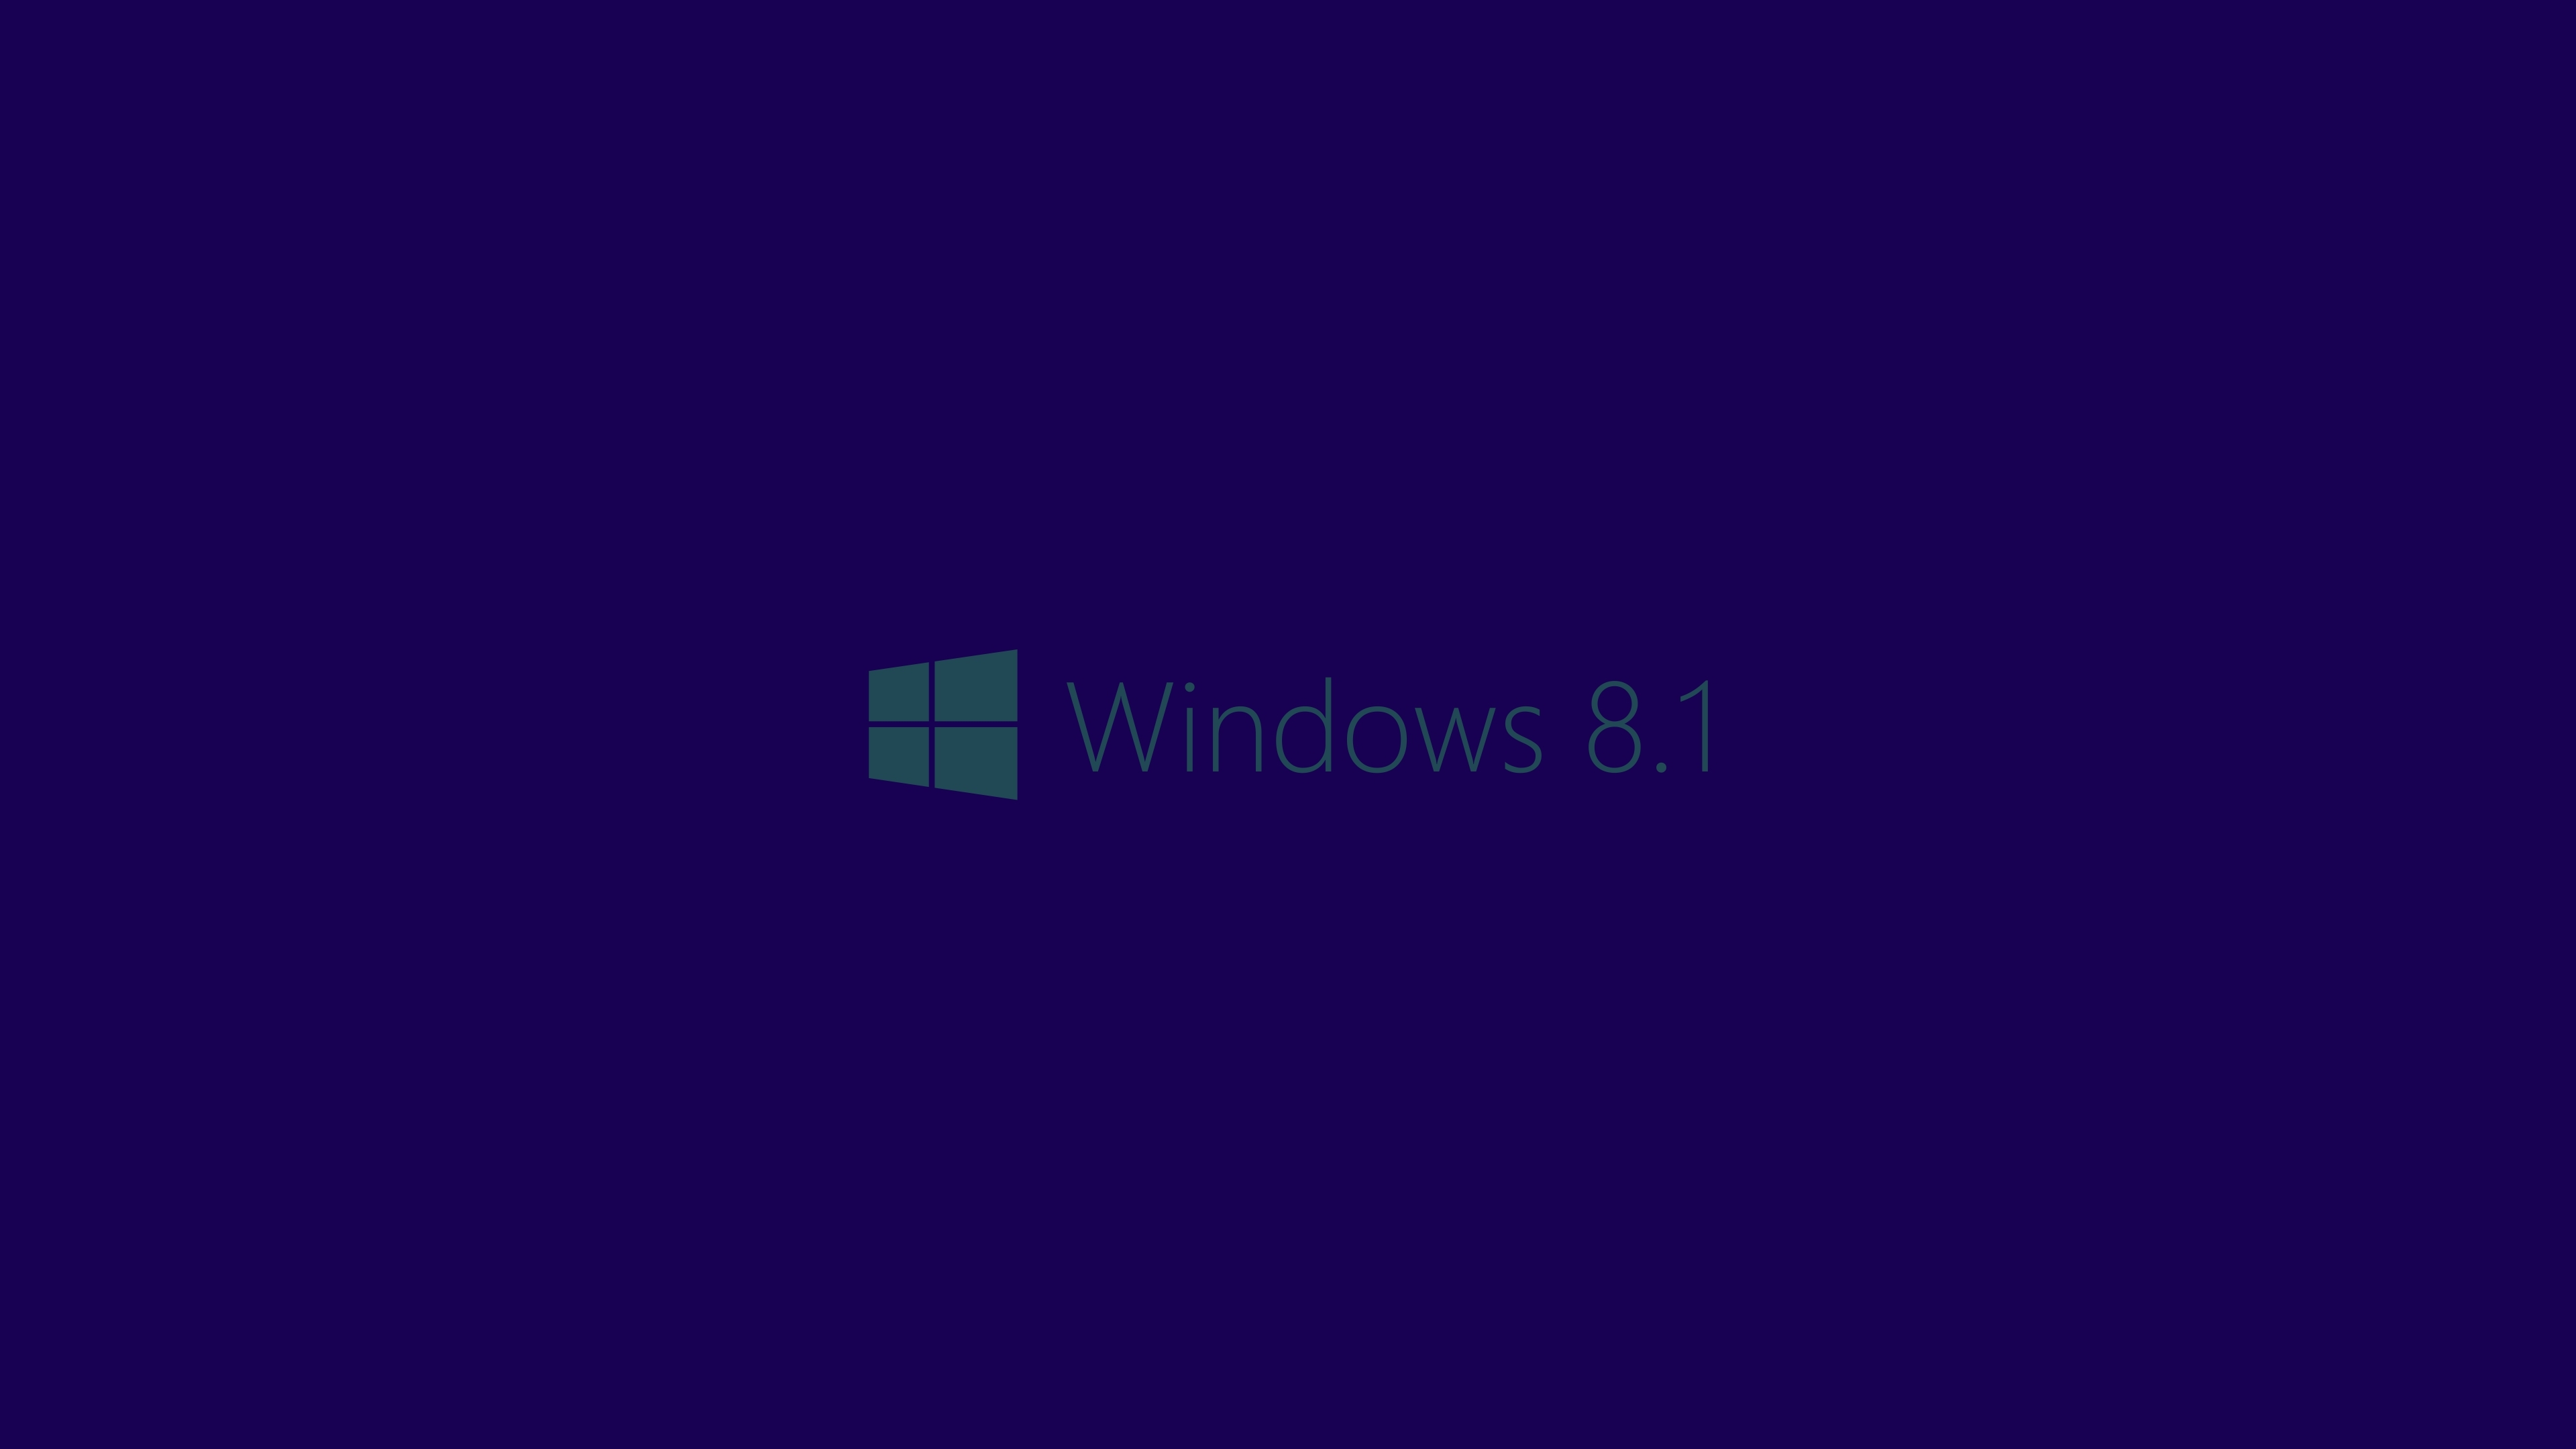 fond d'écran windows 8.1,bleu,violet,noir,violet,bleu cobalt